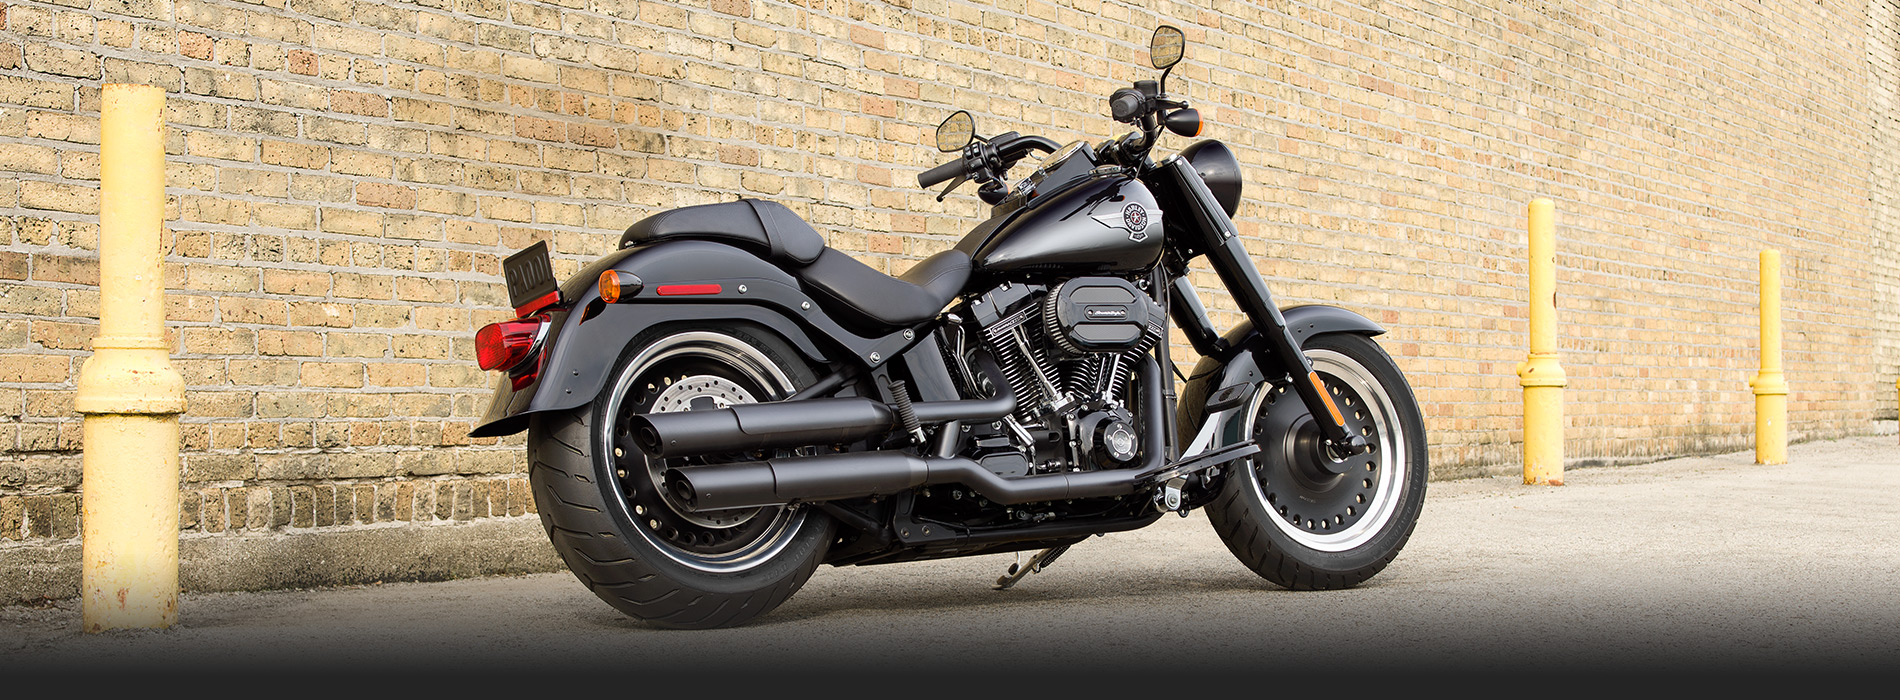 Harley-Davidson Fat Boy Backgrounds, Compatible - PC, Mobile, Gadgets| 1900x700 px